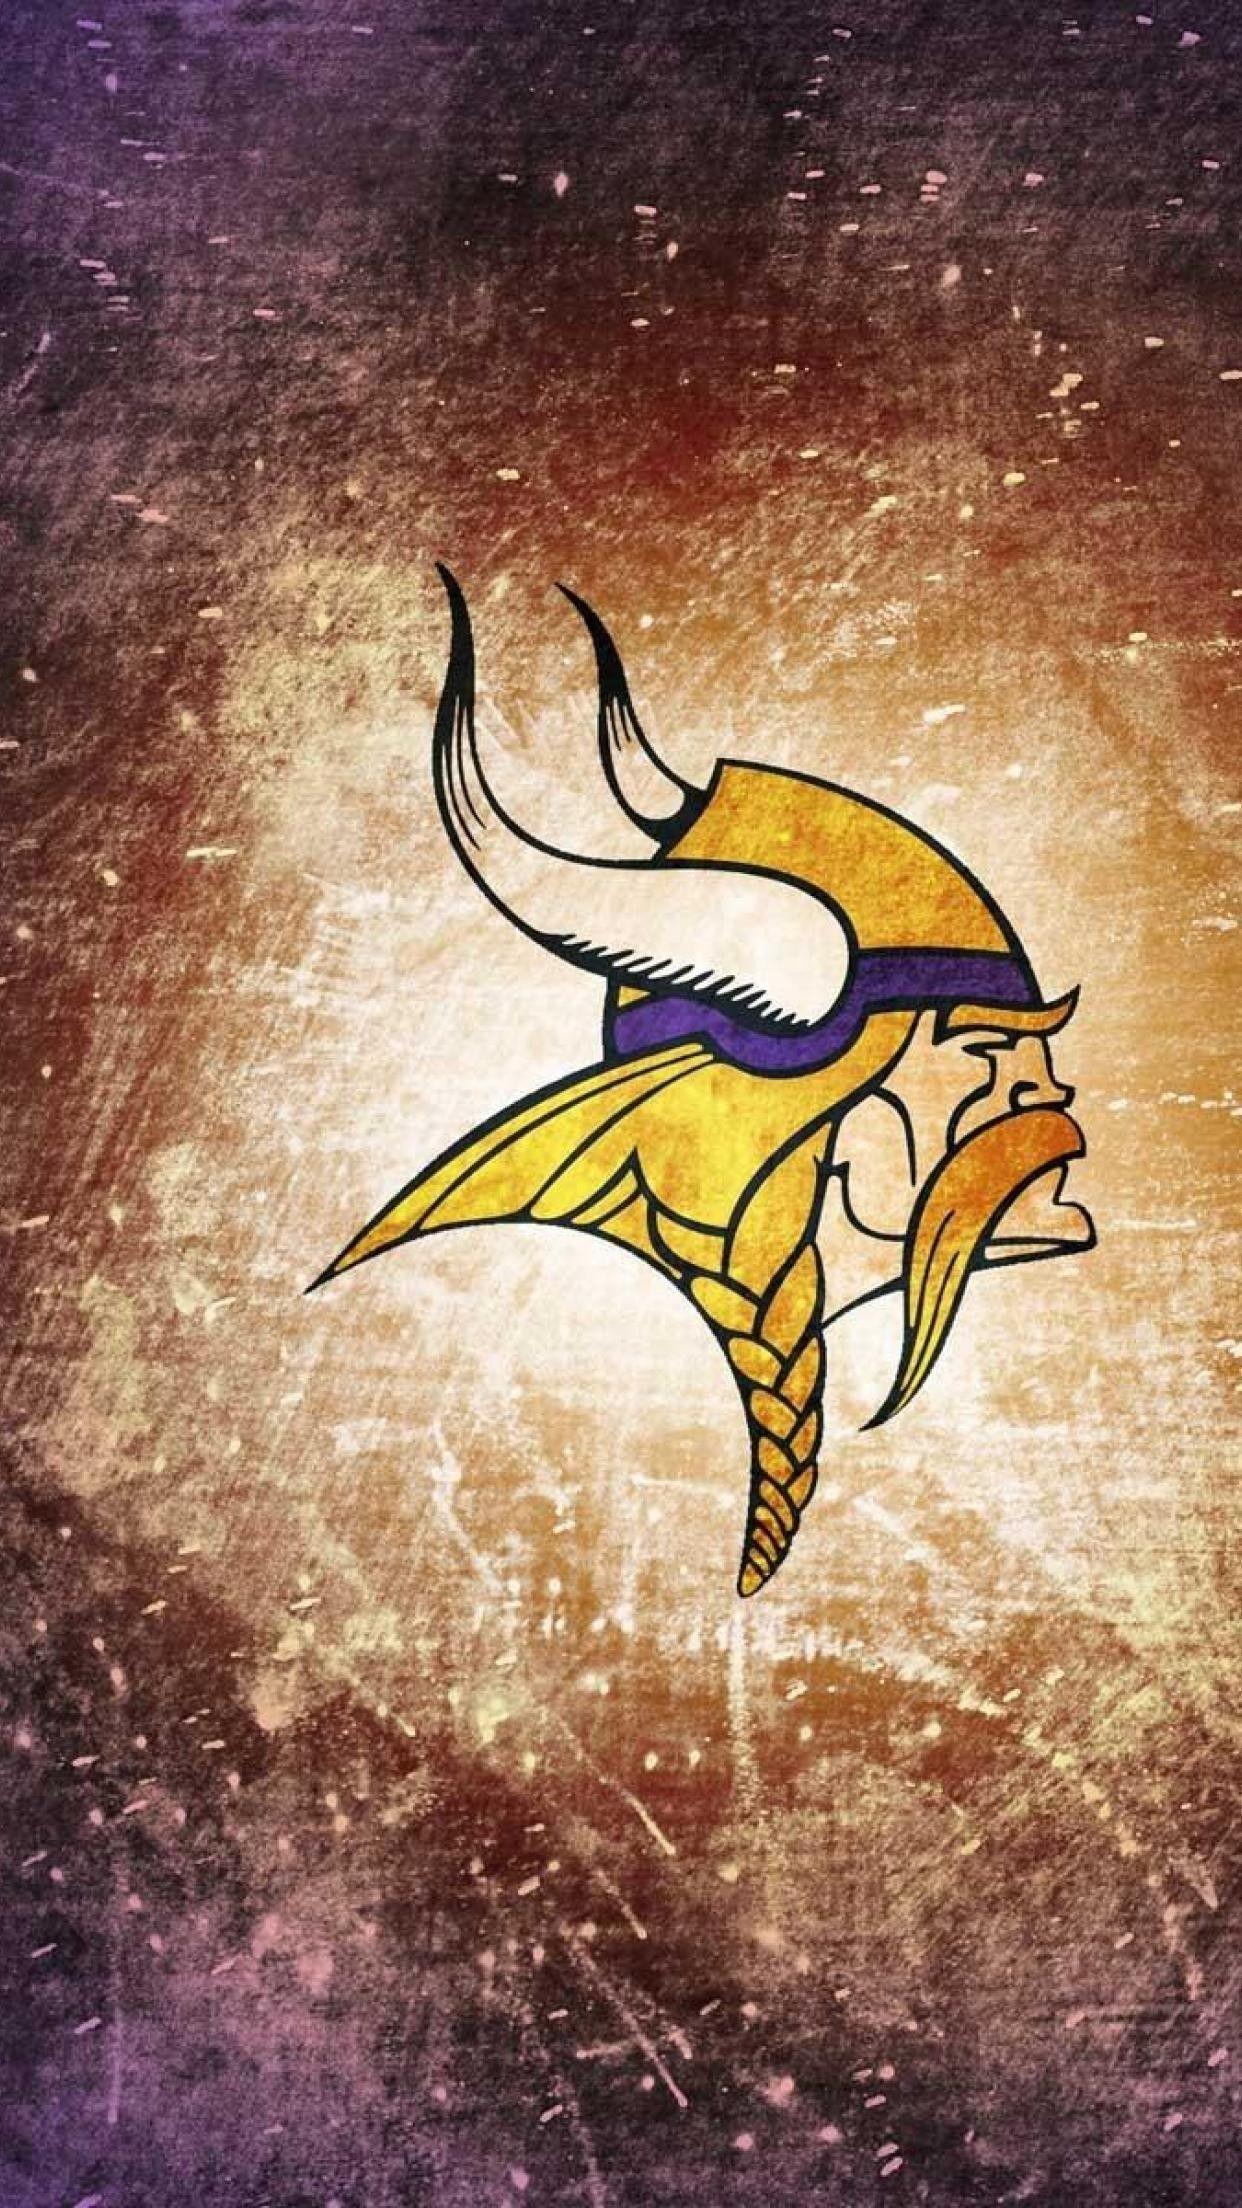 Minnesota Vikings on Twitter Wallpapers are here  httpstcoUDxJpjg1FQ  Twitter